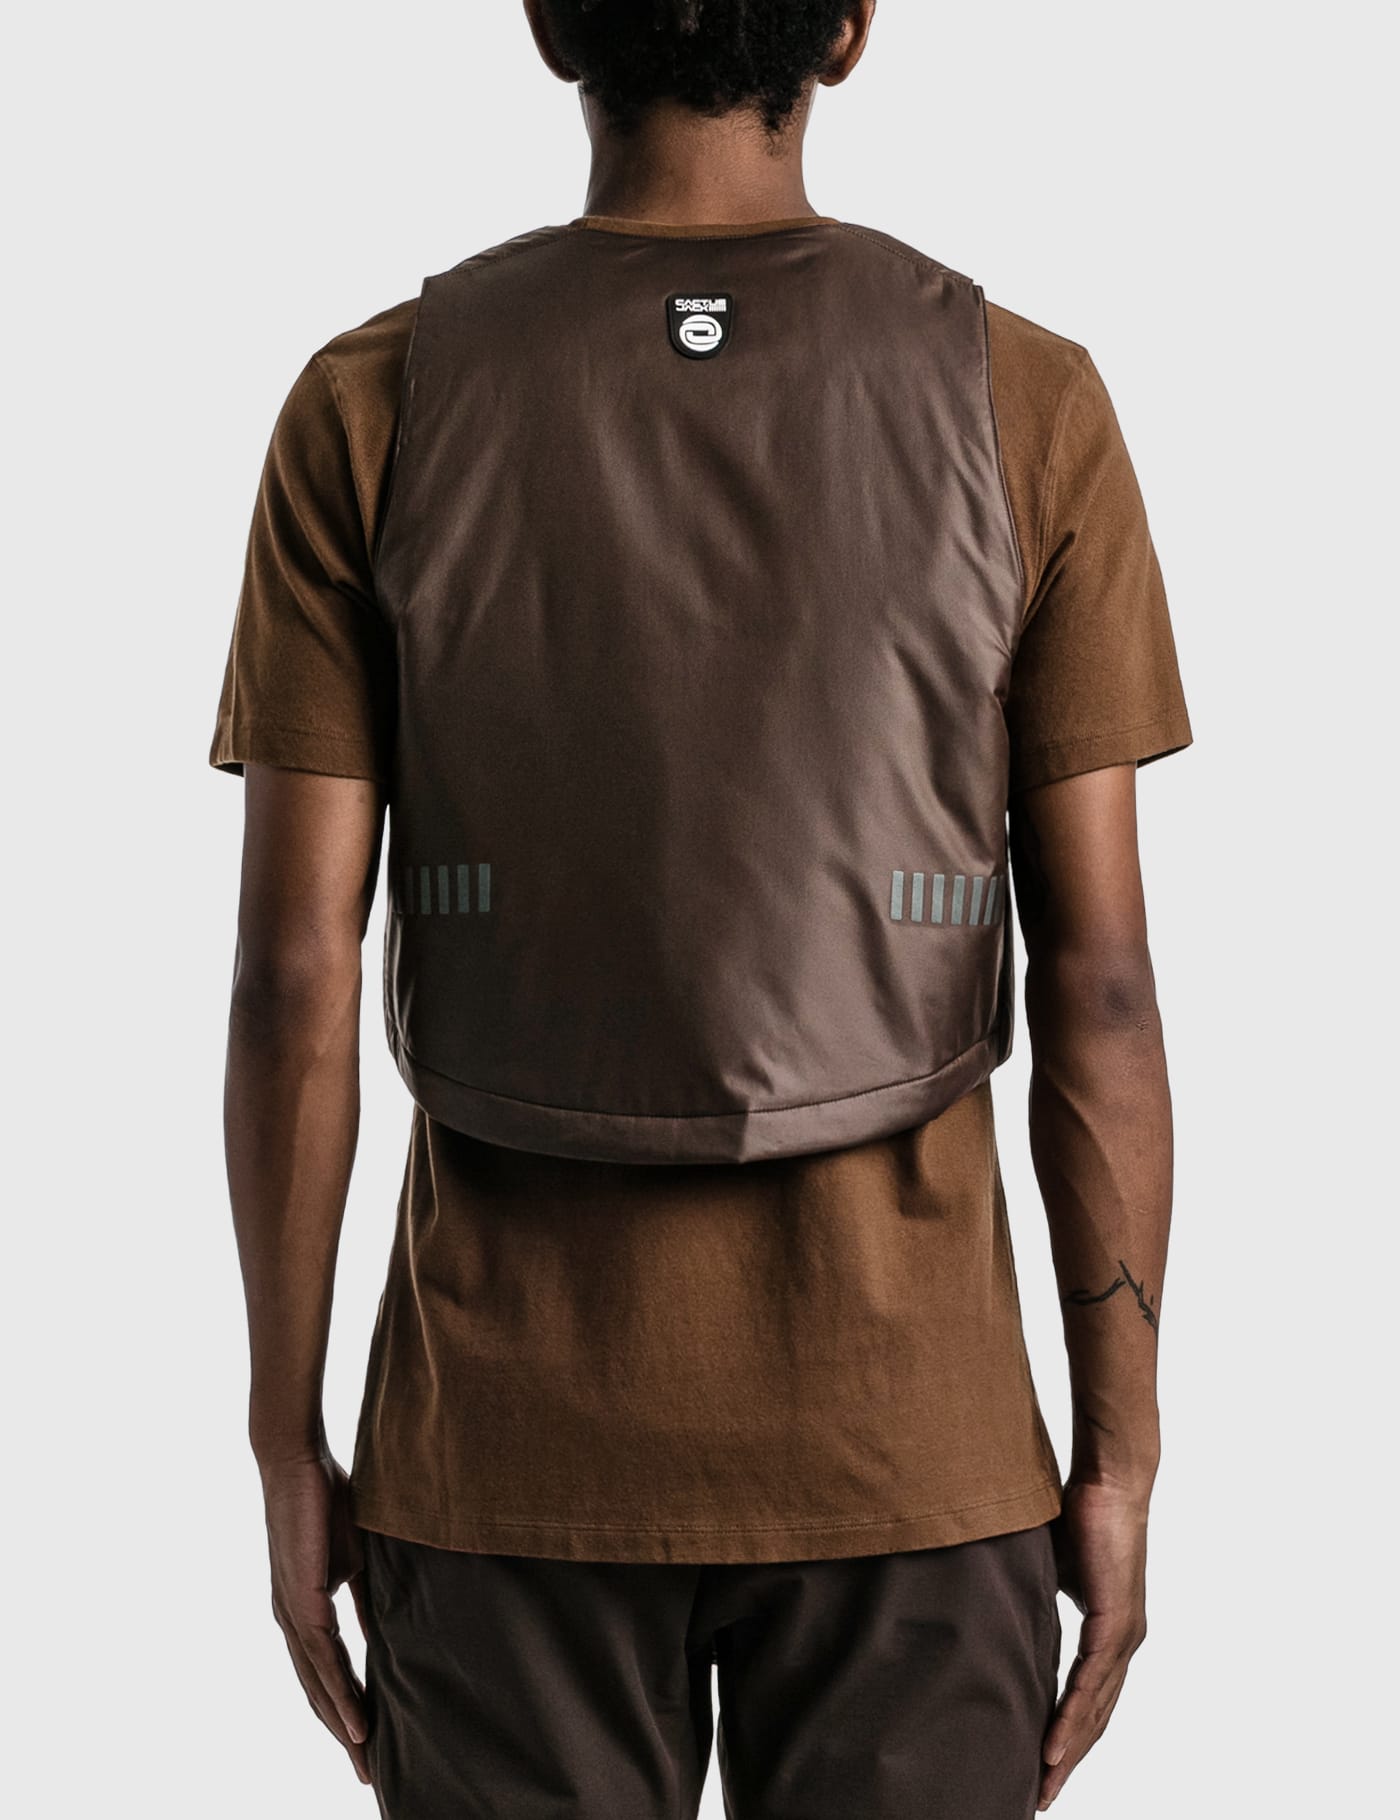 Nike - Nike x Travis Scott Woven Vest | HBX - Globally Curated